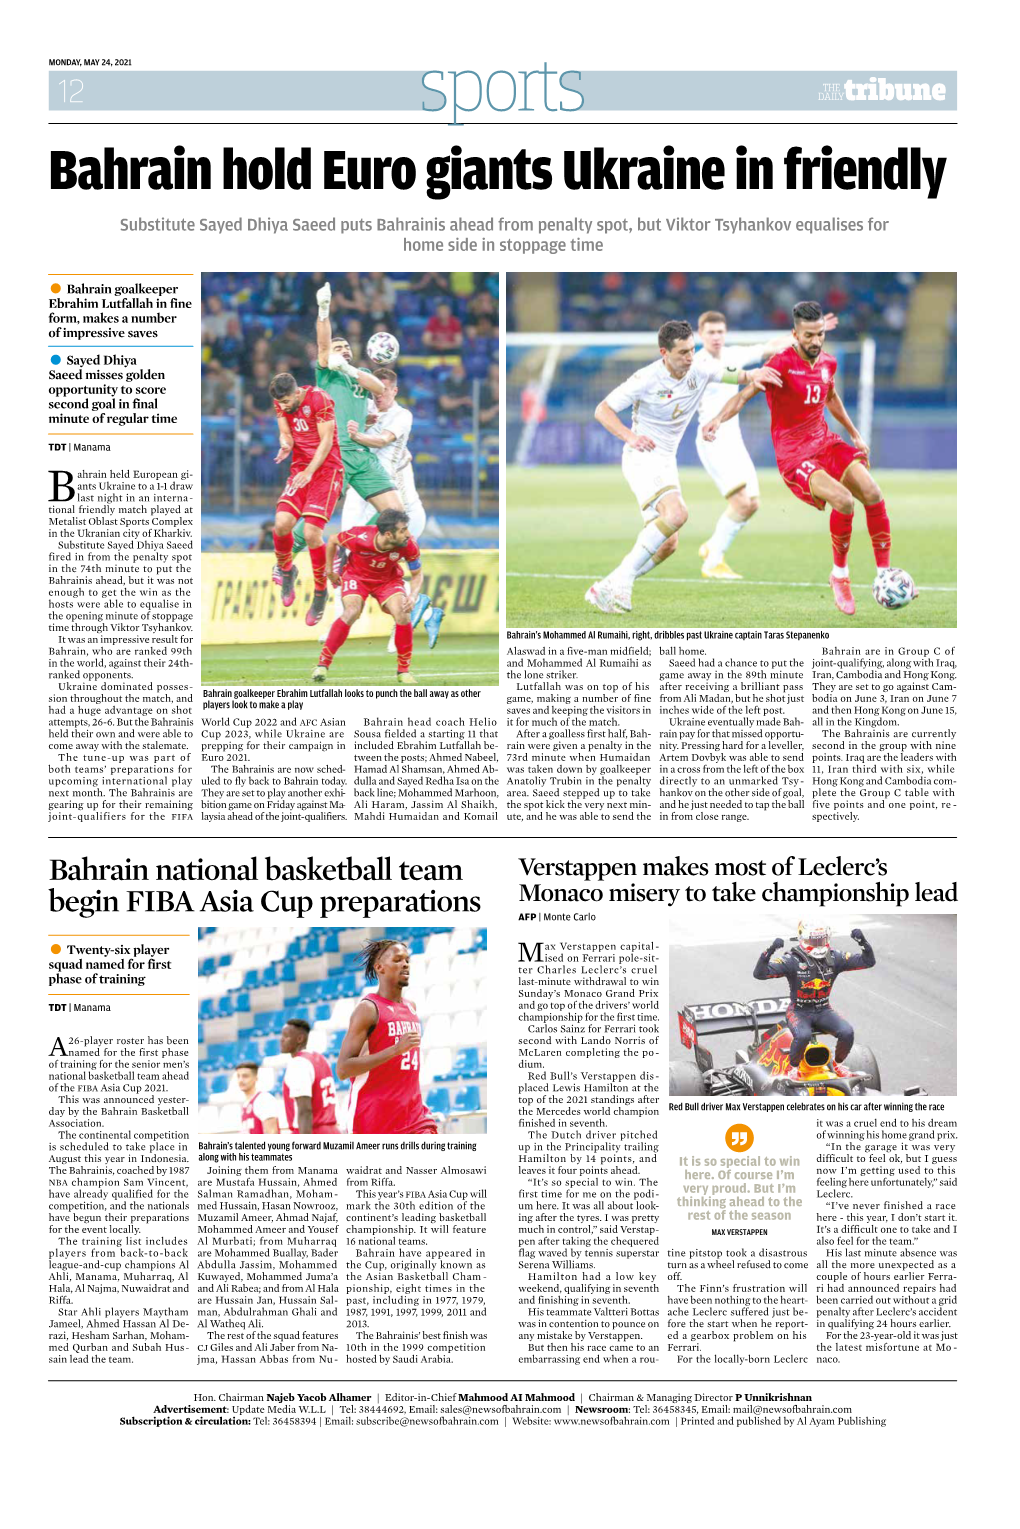 Bahrain Hold Euro Giants Ukraine in Friendly